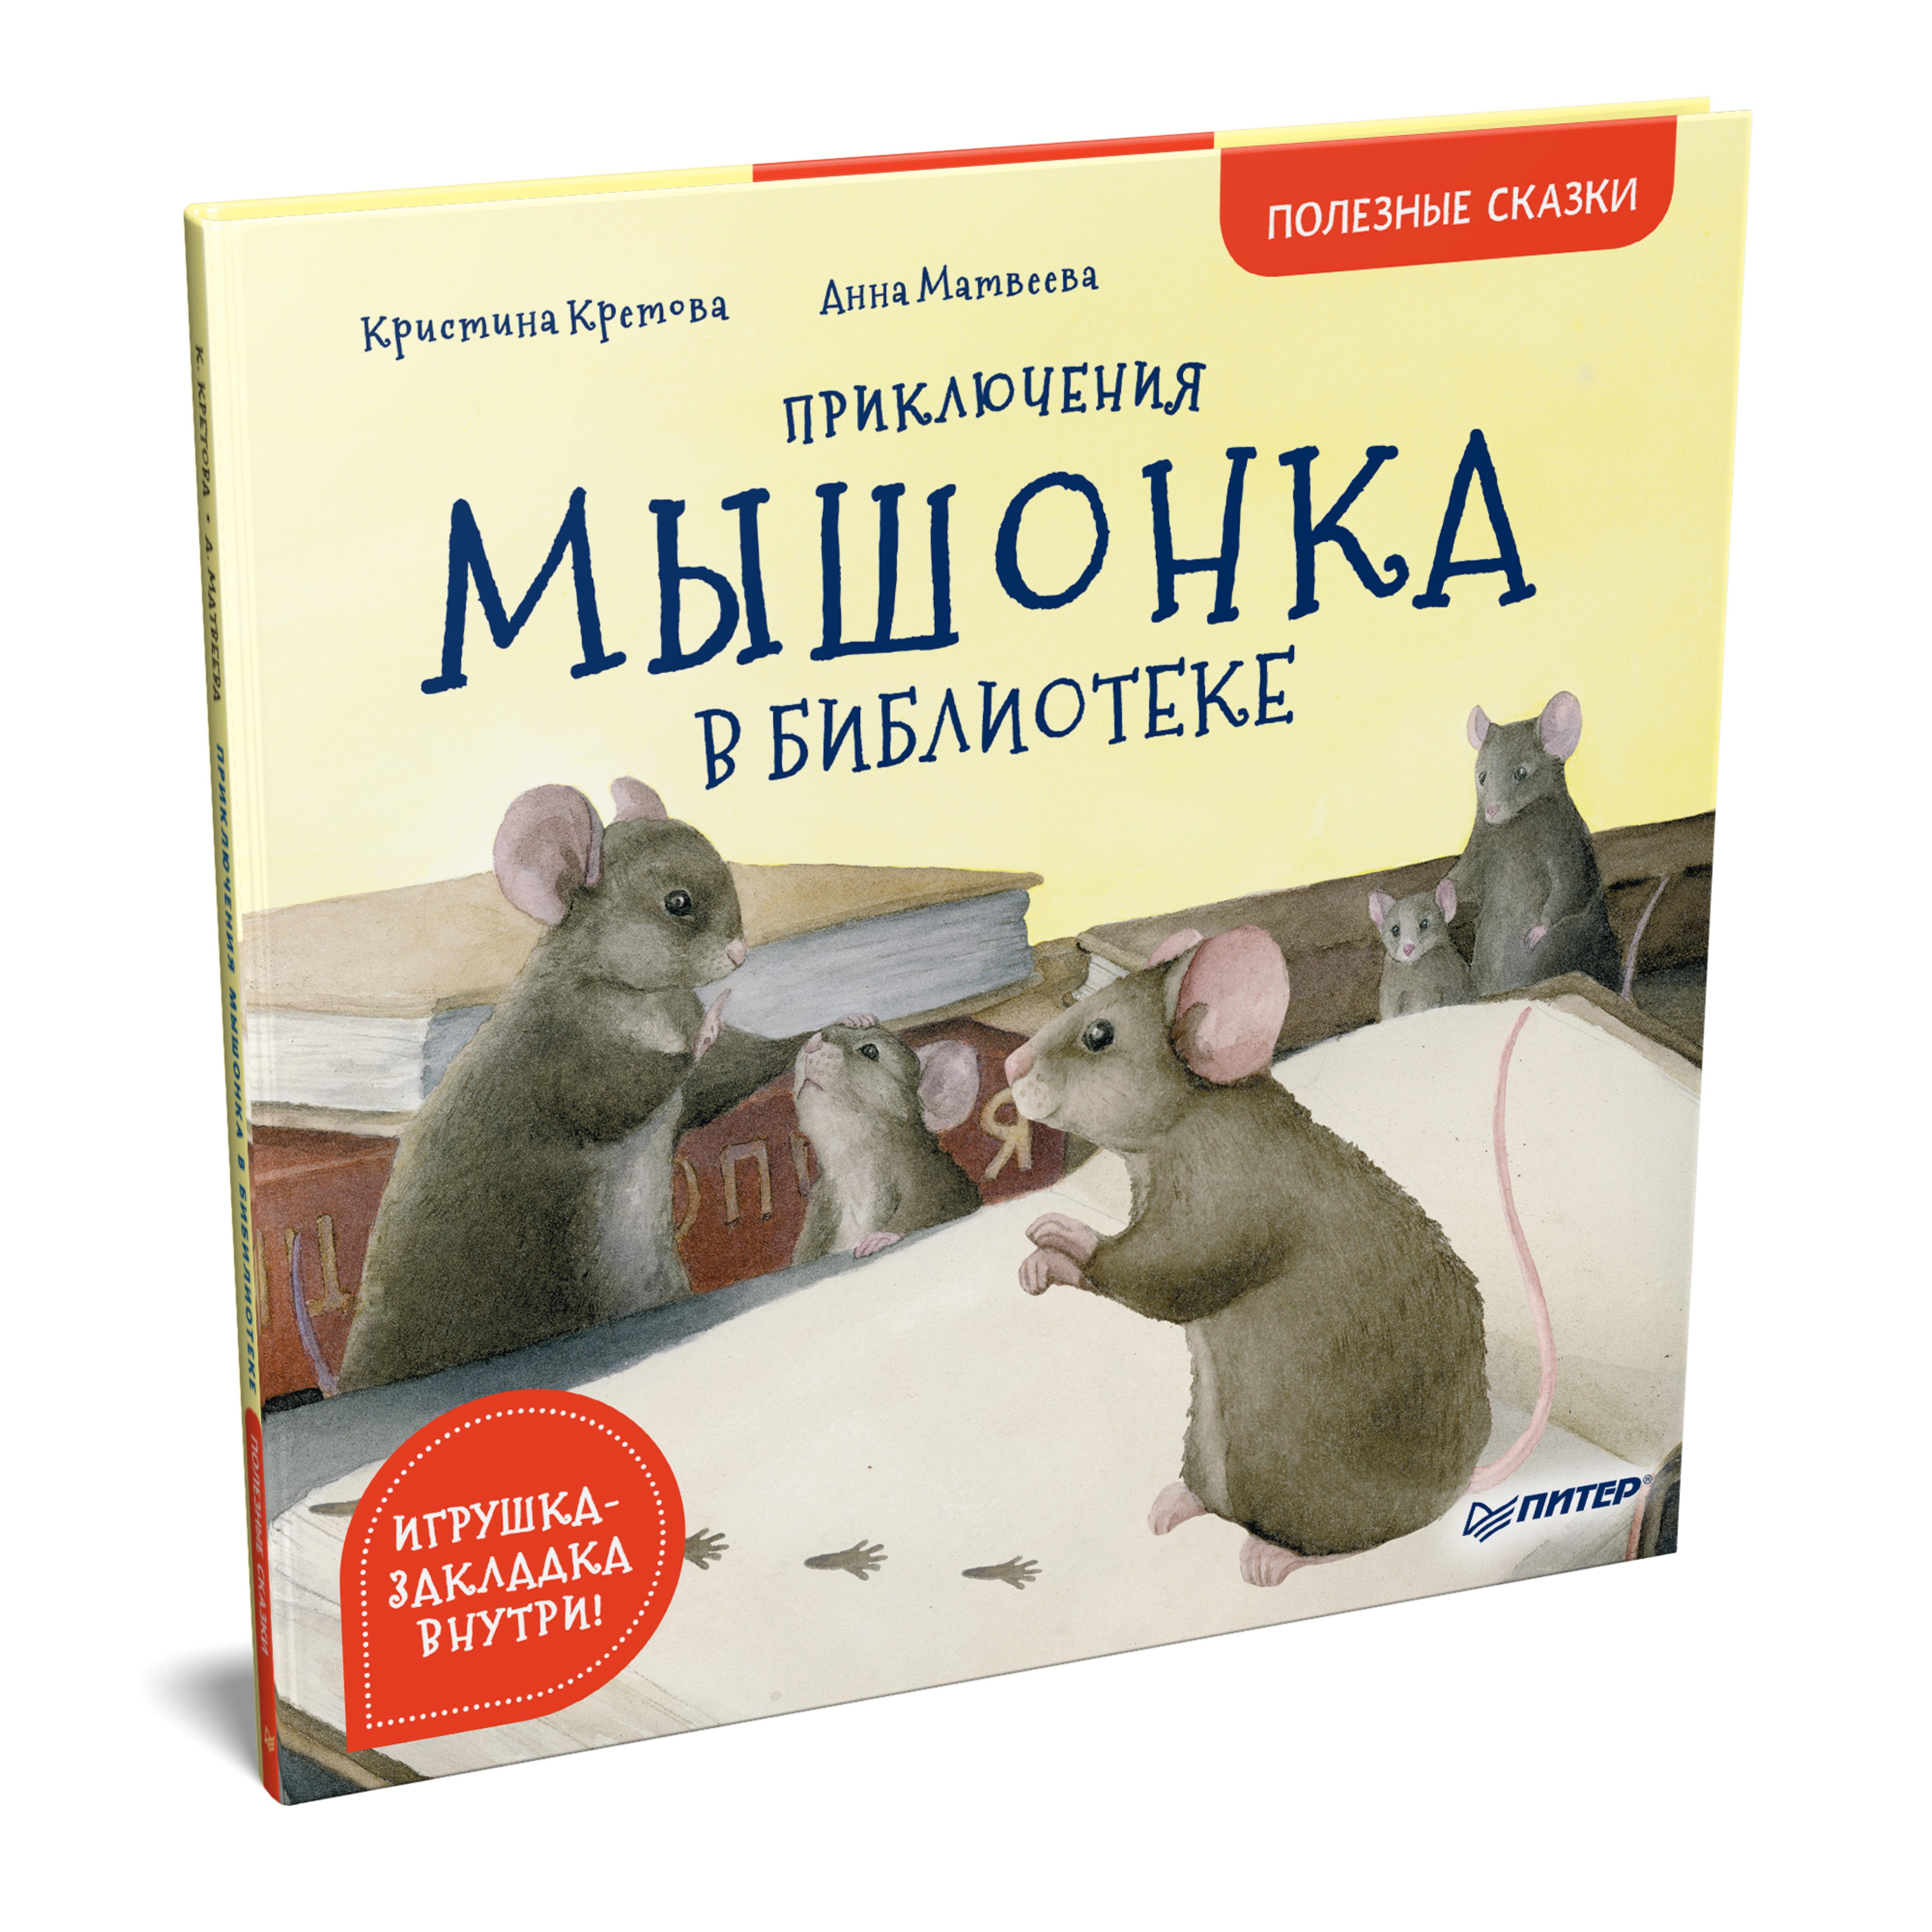 Книга "Приключения мышонка в библиотеке", К. Кретова, А. Матвеева